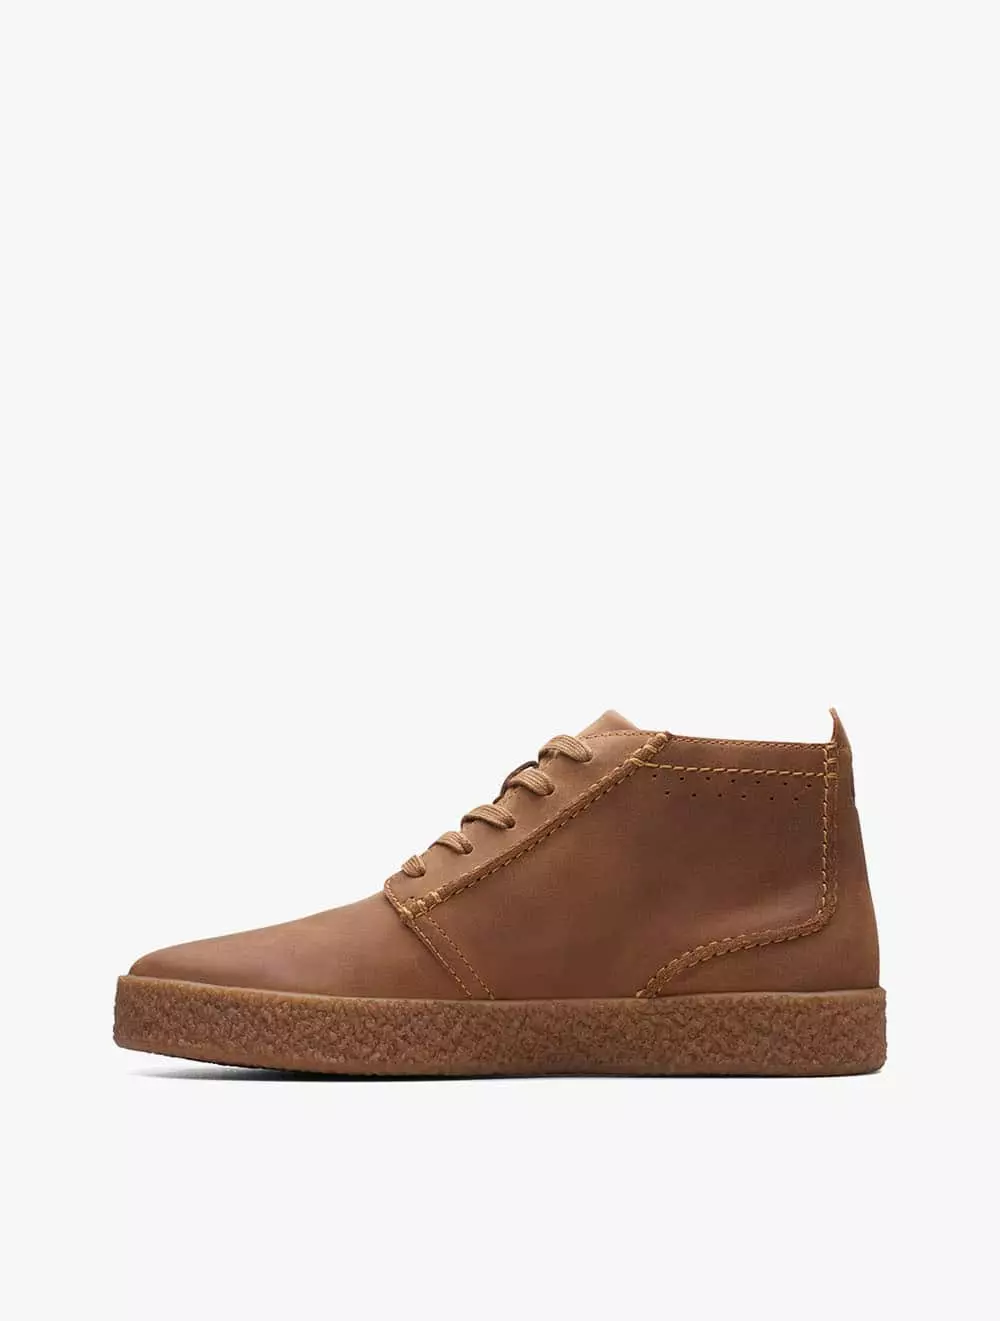 Jual Clarks Clarks Streethill Mid Men's Sneakers- Dark Tan Leather ...